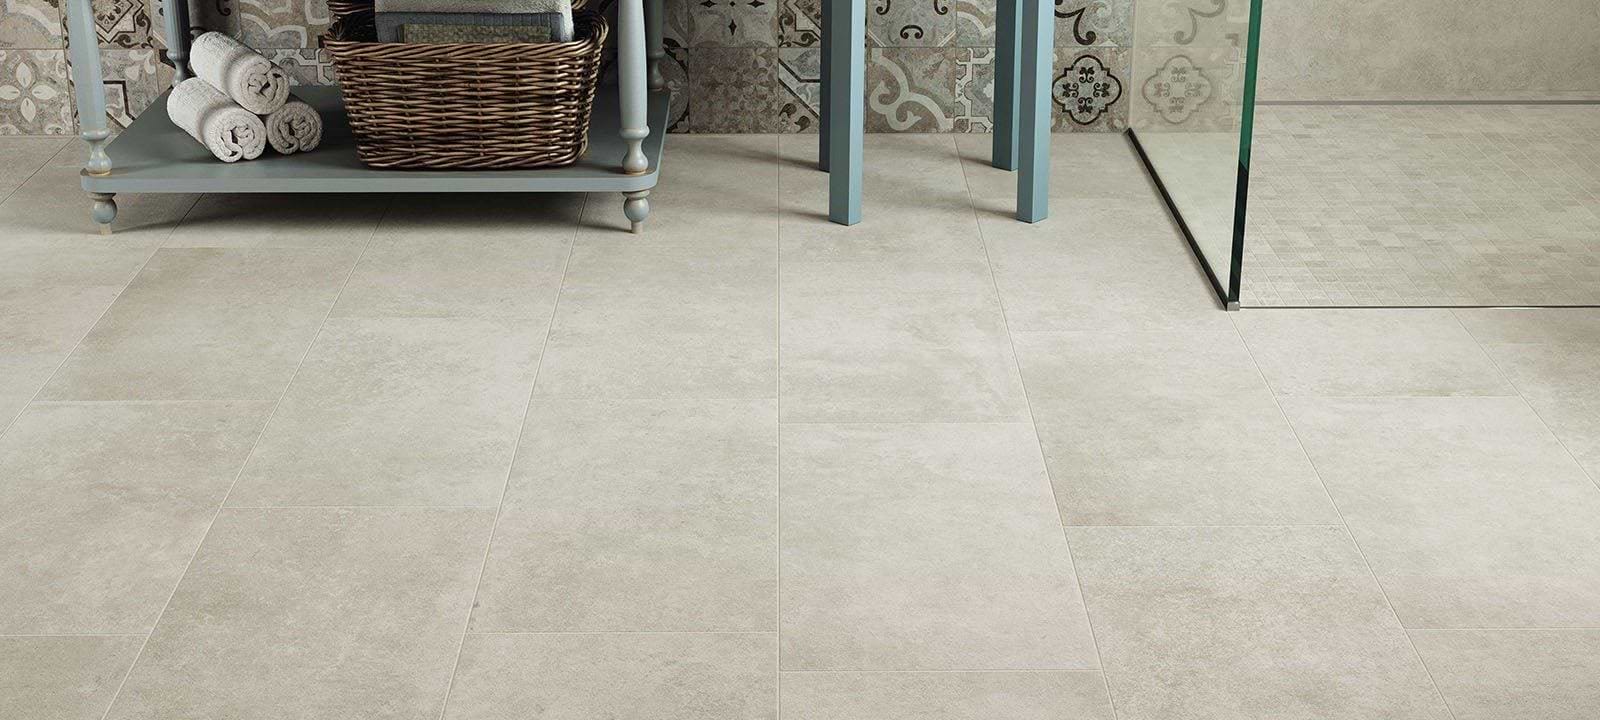 Minoli Wall & Floor Tiles Plain 60 x 60 x 0.8cm Codec White Matt 60 x 60cm